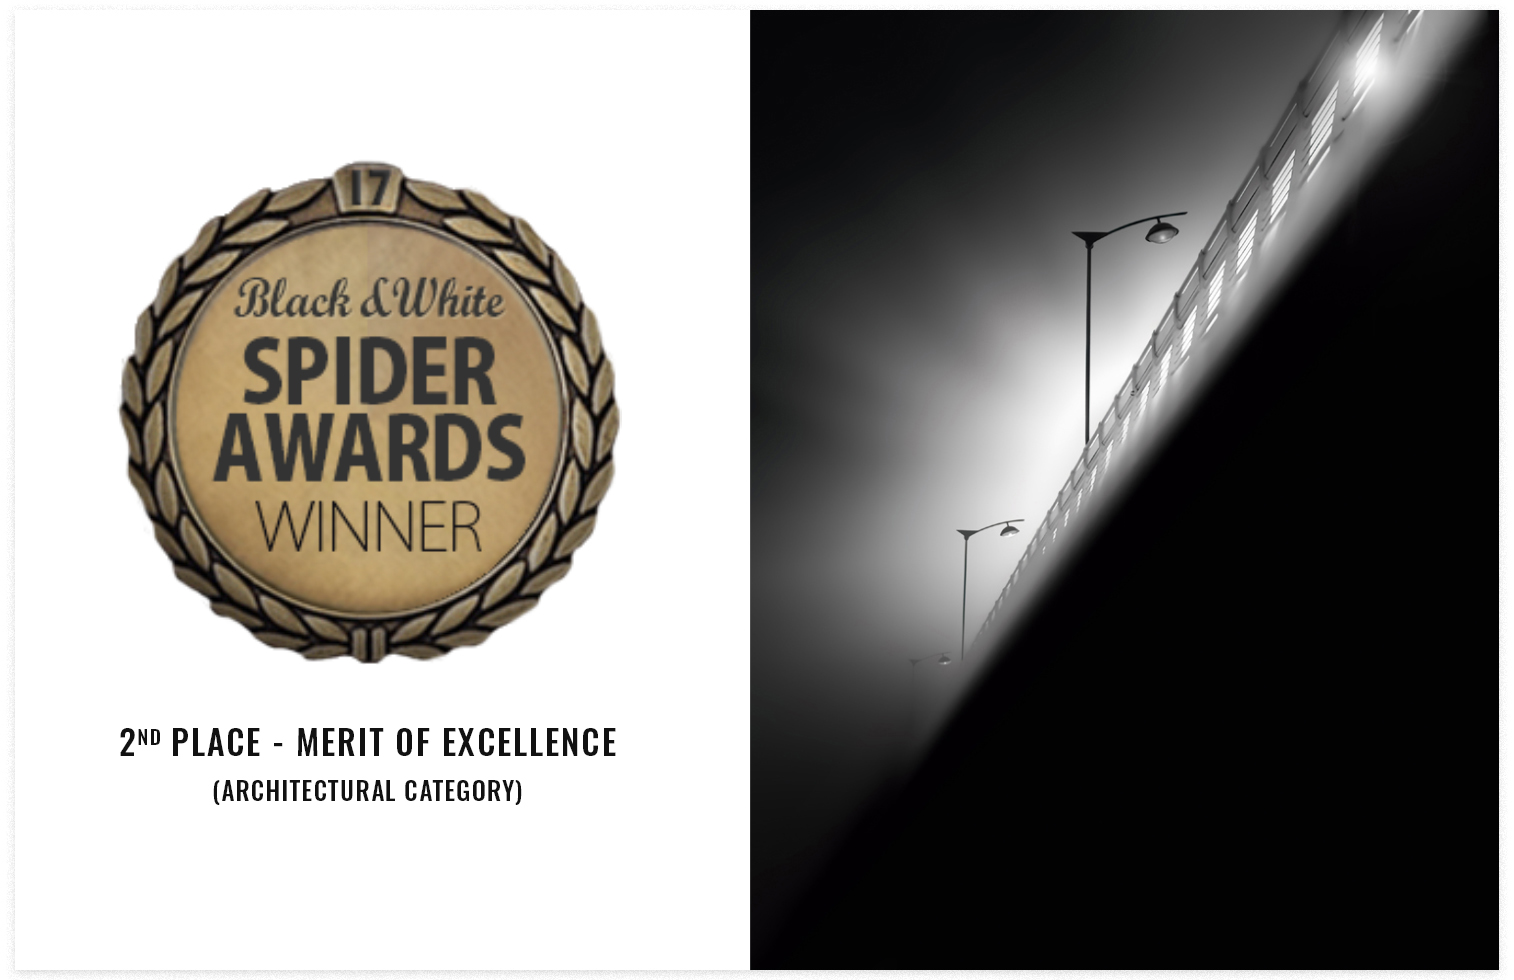 17th Annual Black & White Spider Awards